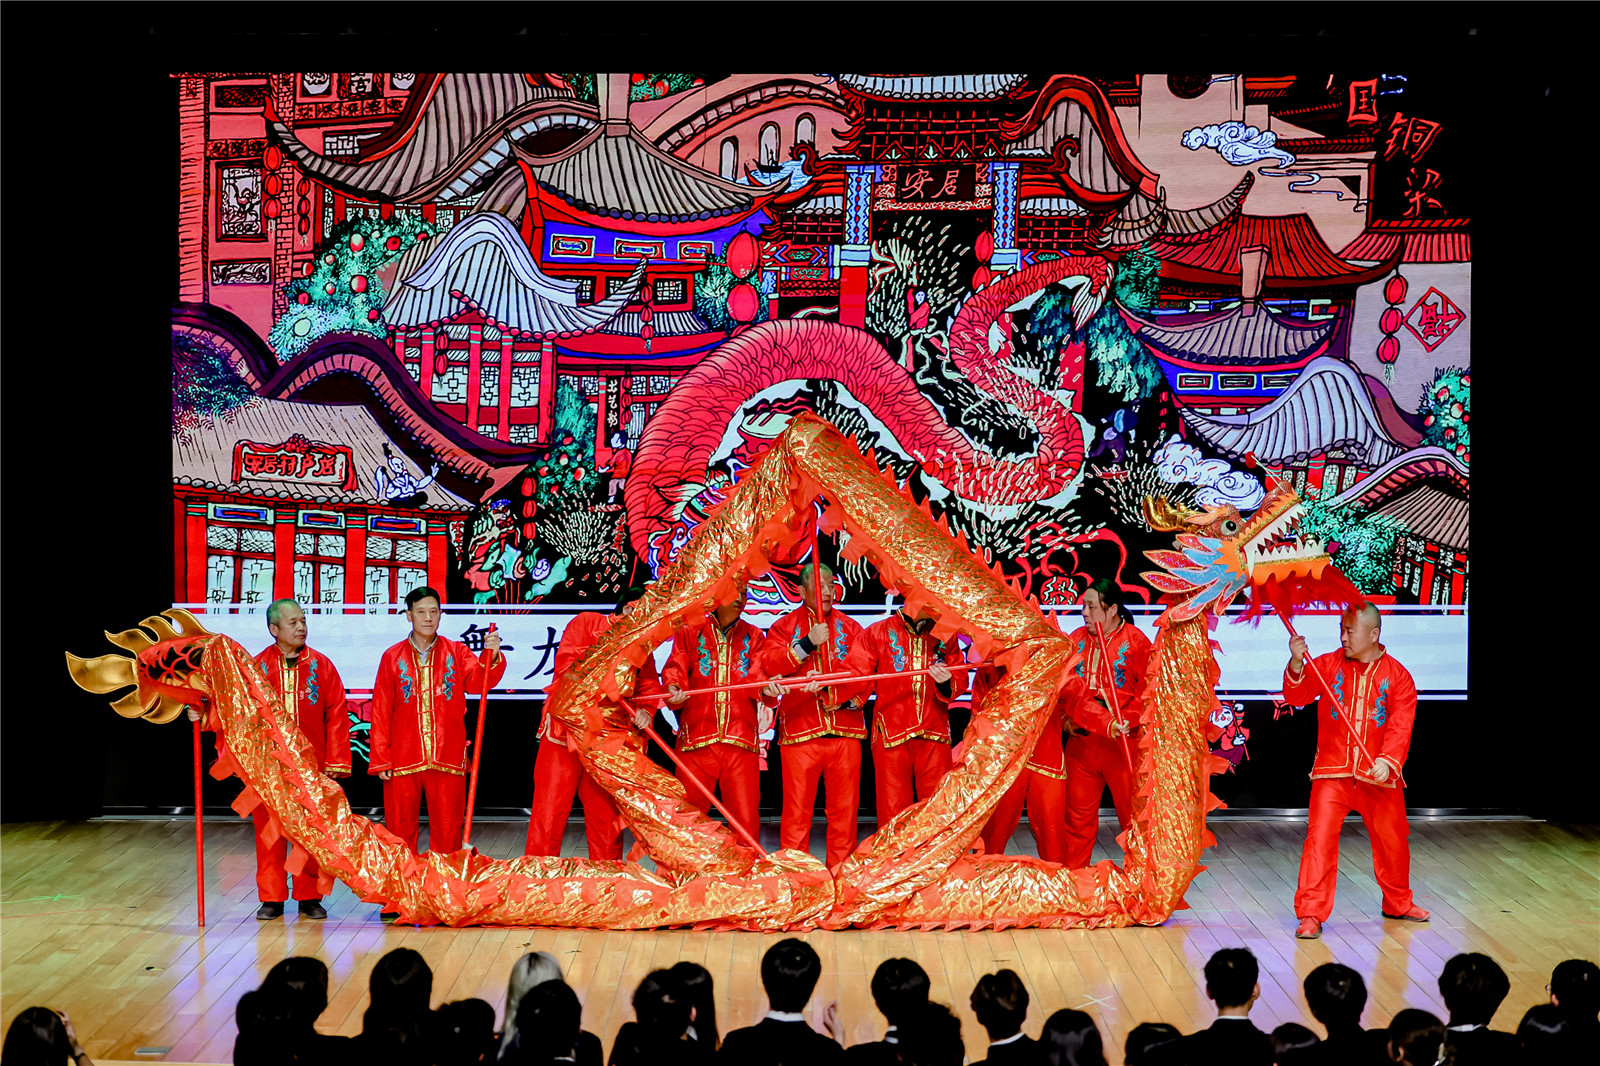 Chinese New Year celebrations - Dragon dance